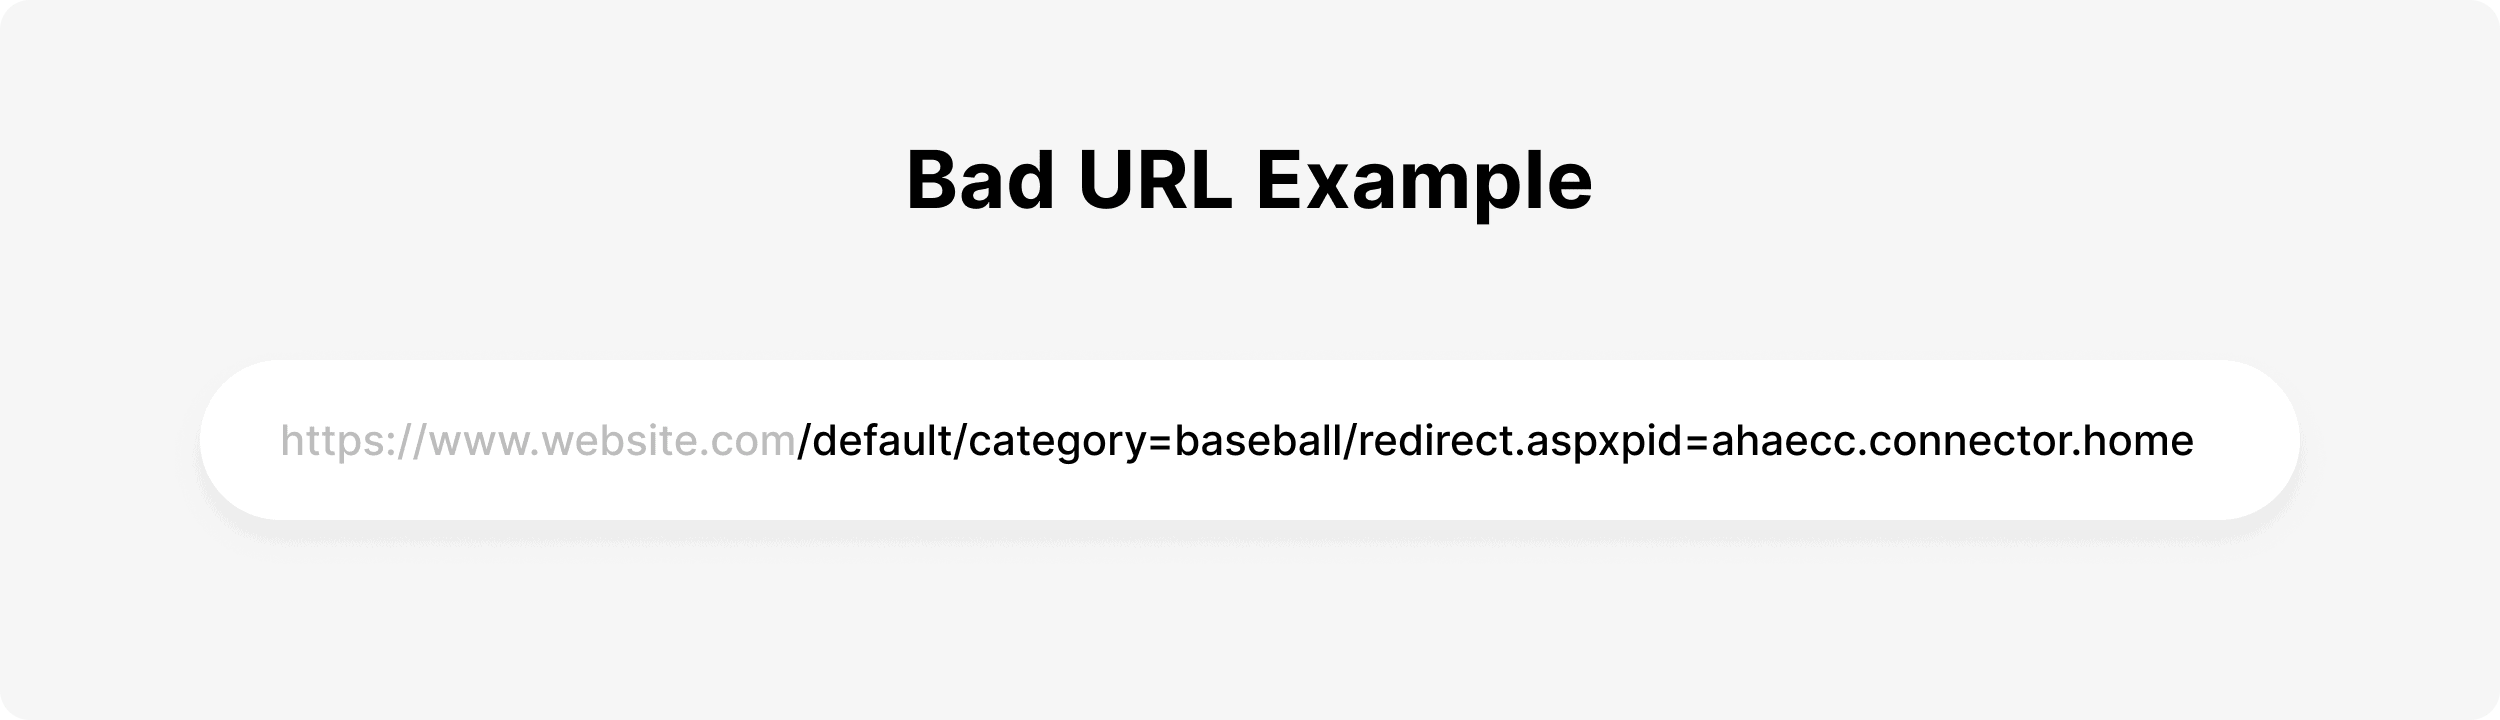 Bad URL example